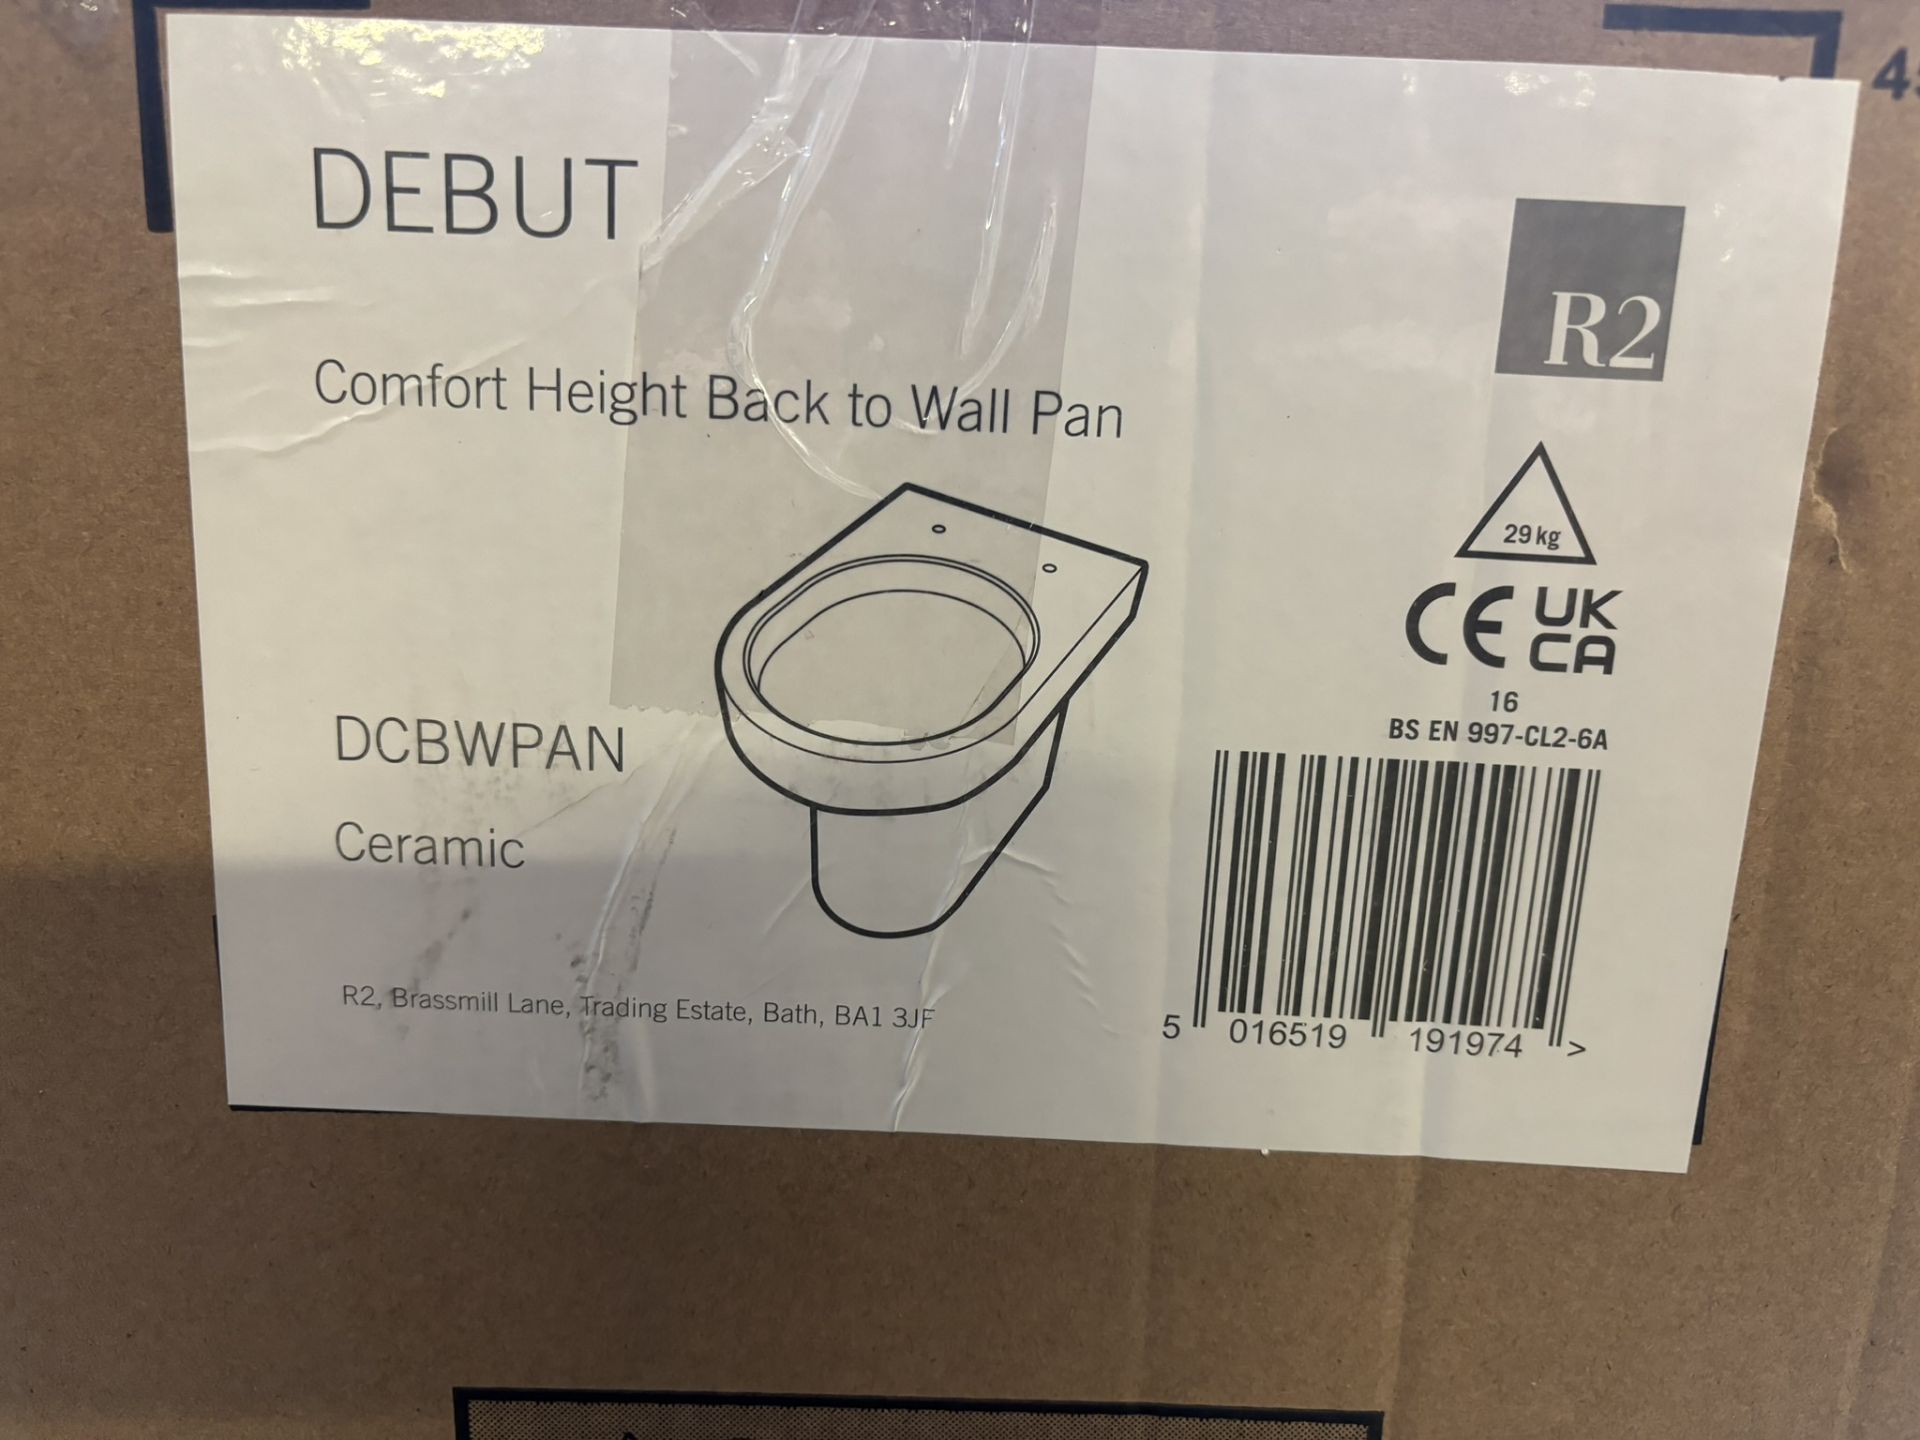 R2 Bathrooms Debut DCBWPAN Ceramic Comfort Height Back To Wall Pan - Bild 2 aus 4